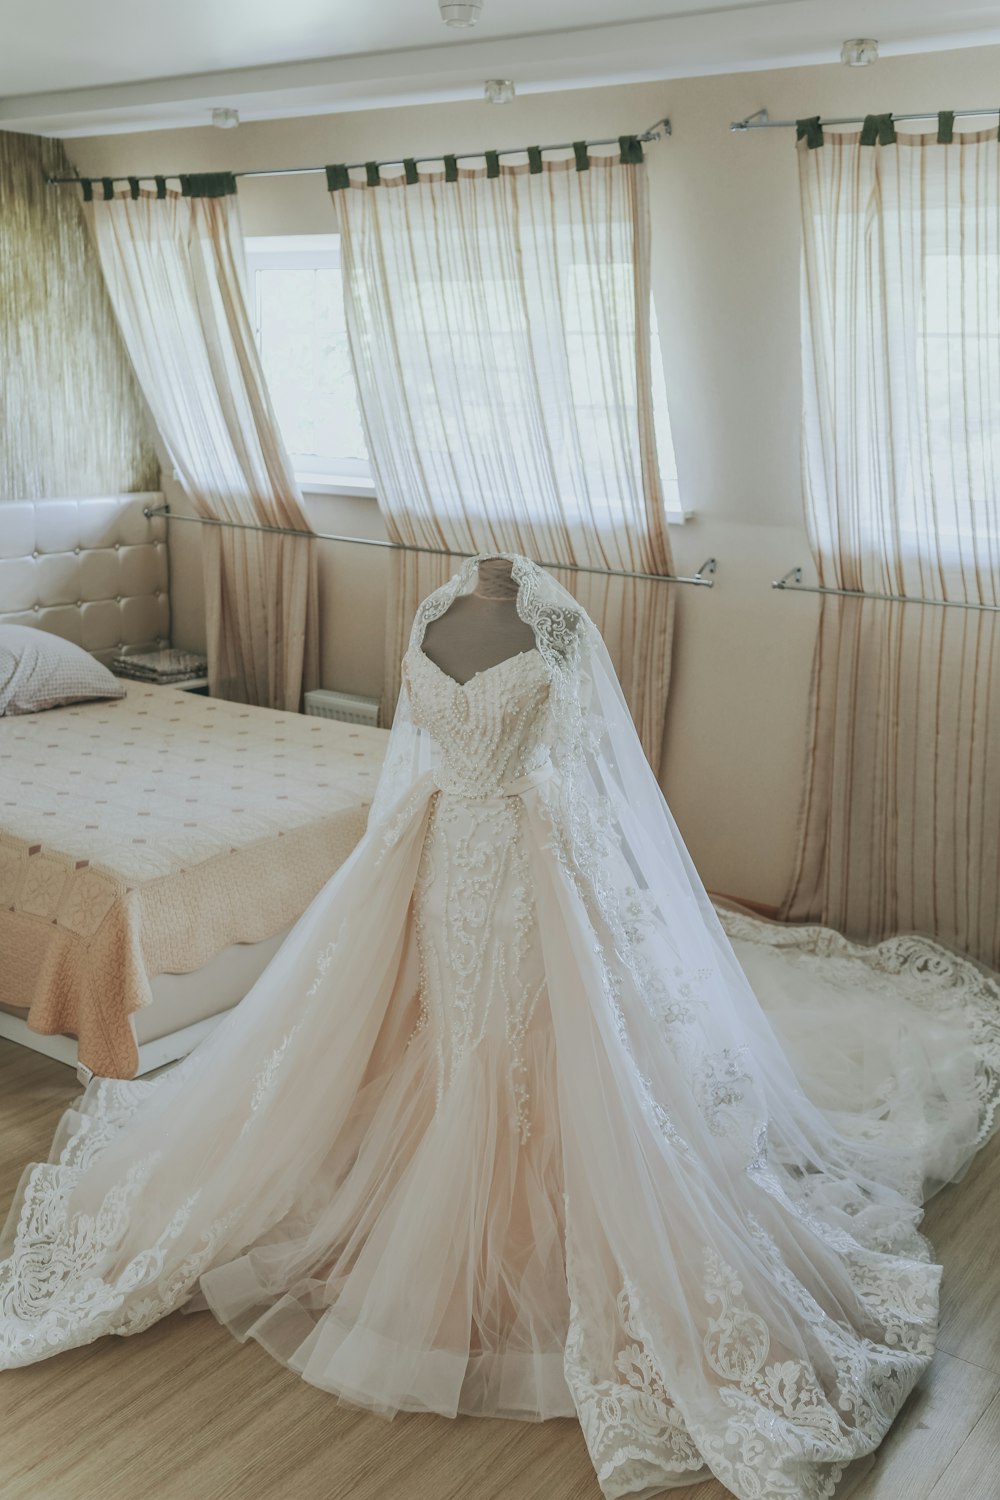 vestido de novia blanco en la cama